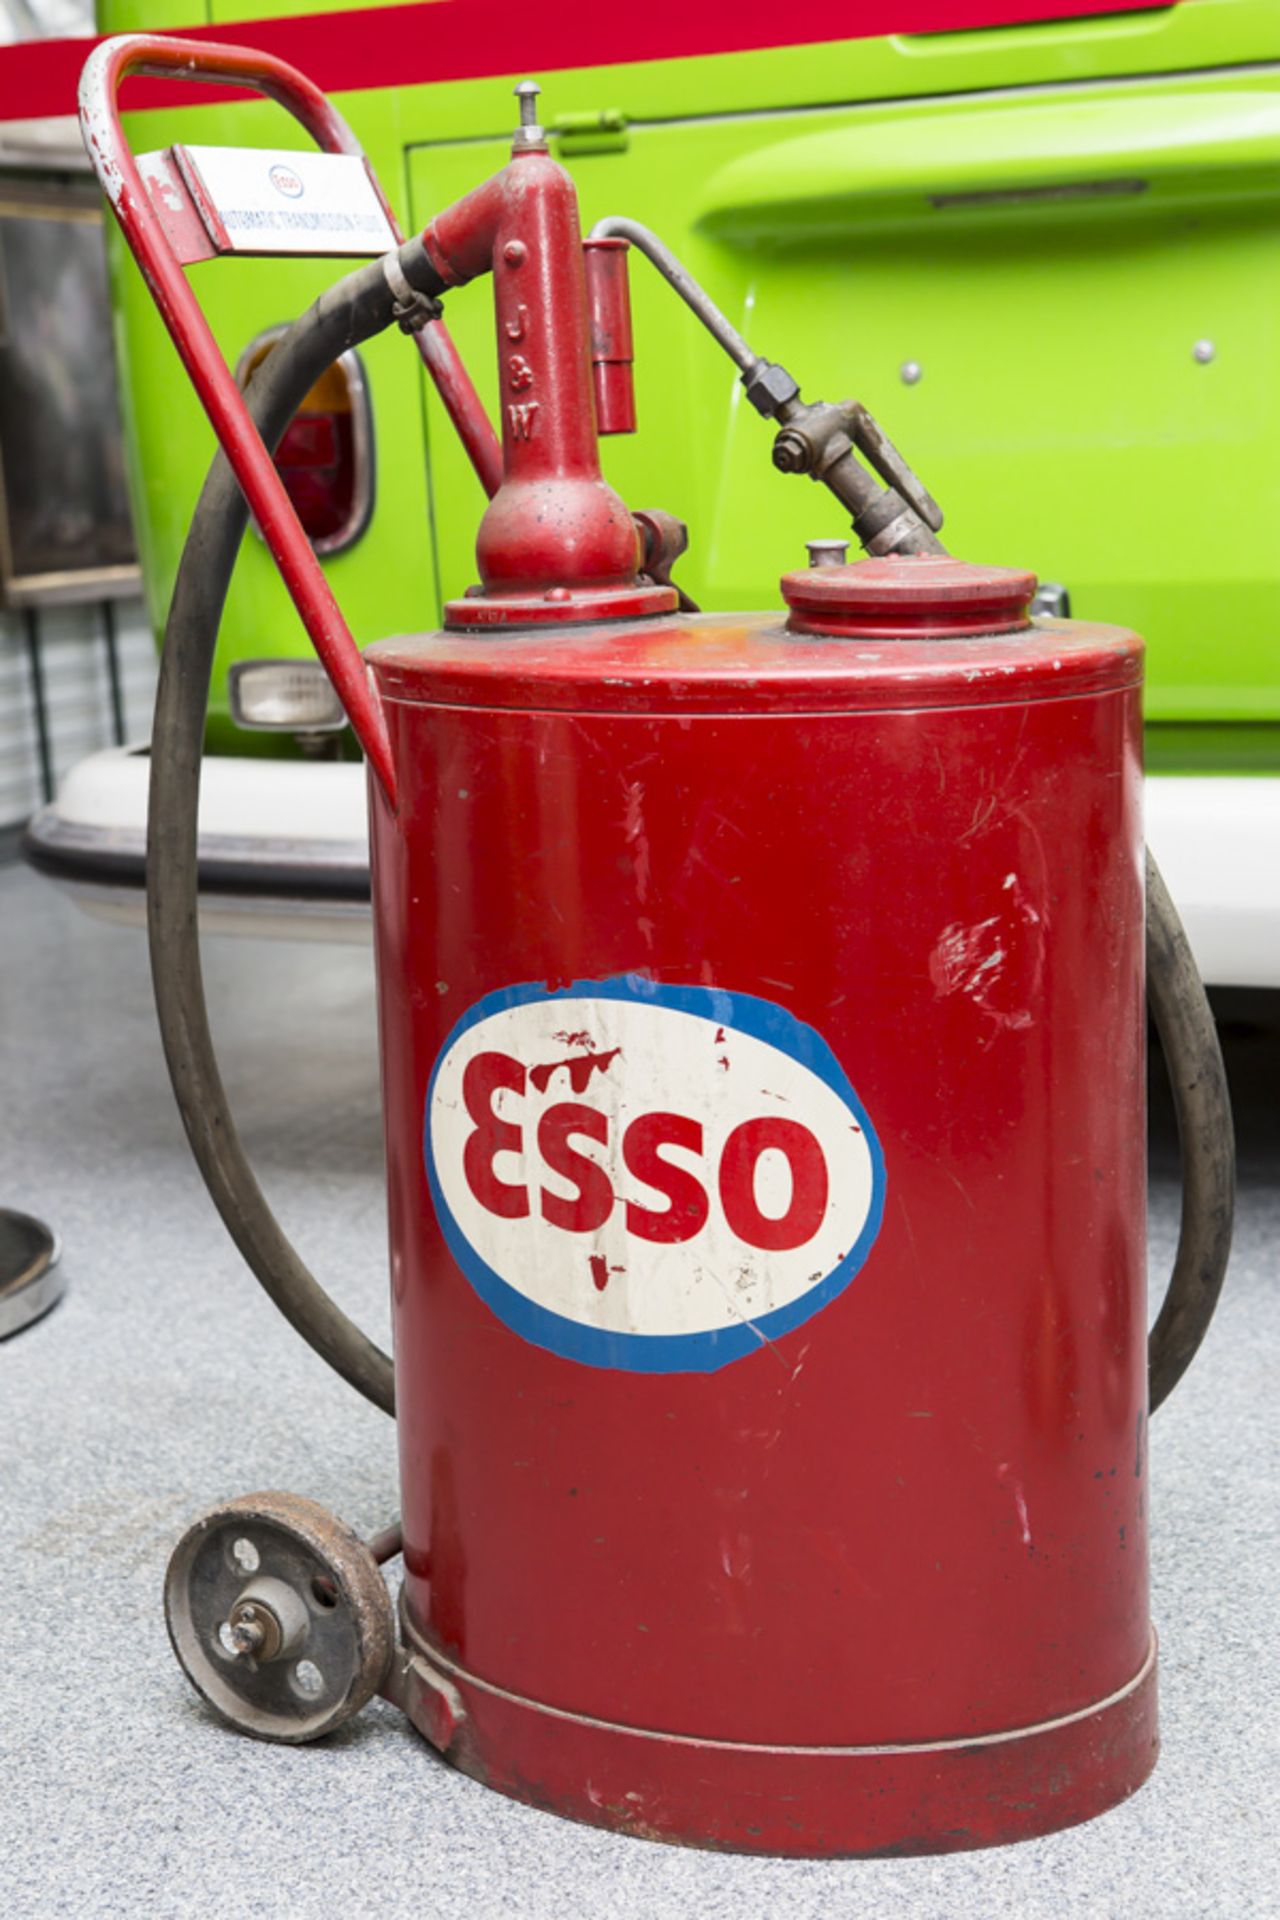 Fahrbare Schmierfettpresse für Automobile, rot lackiert, wohl 50/60er Jahre, Esso,Aufschrift "Esso -